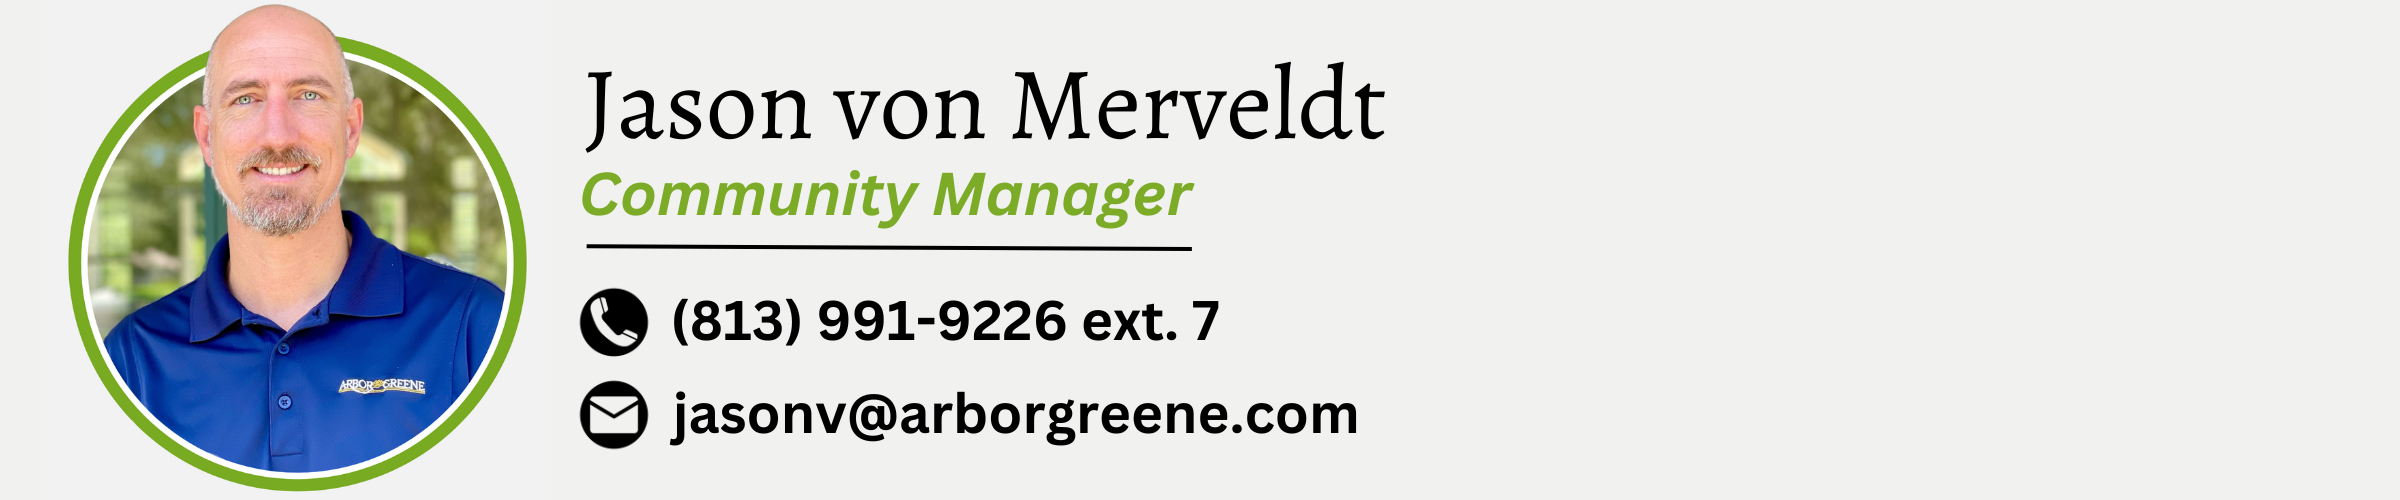 Jason von Merveldt. Community Manager. Phone number is 813-991-9226 extension 7. Email is jasonv@arborgreene.com.